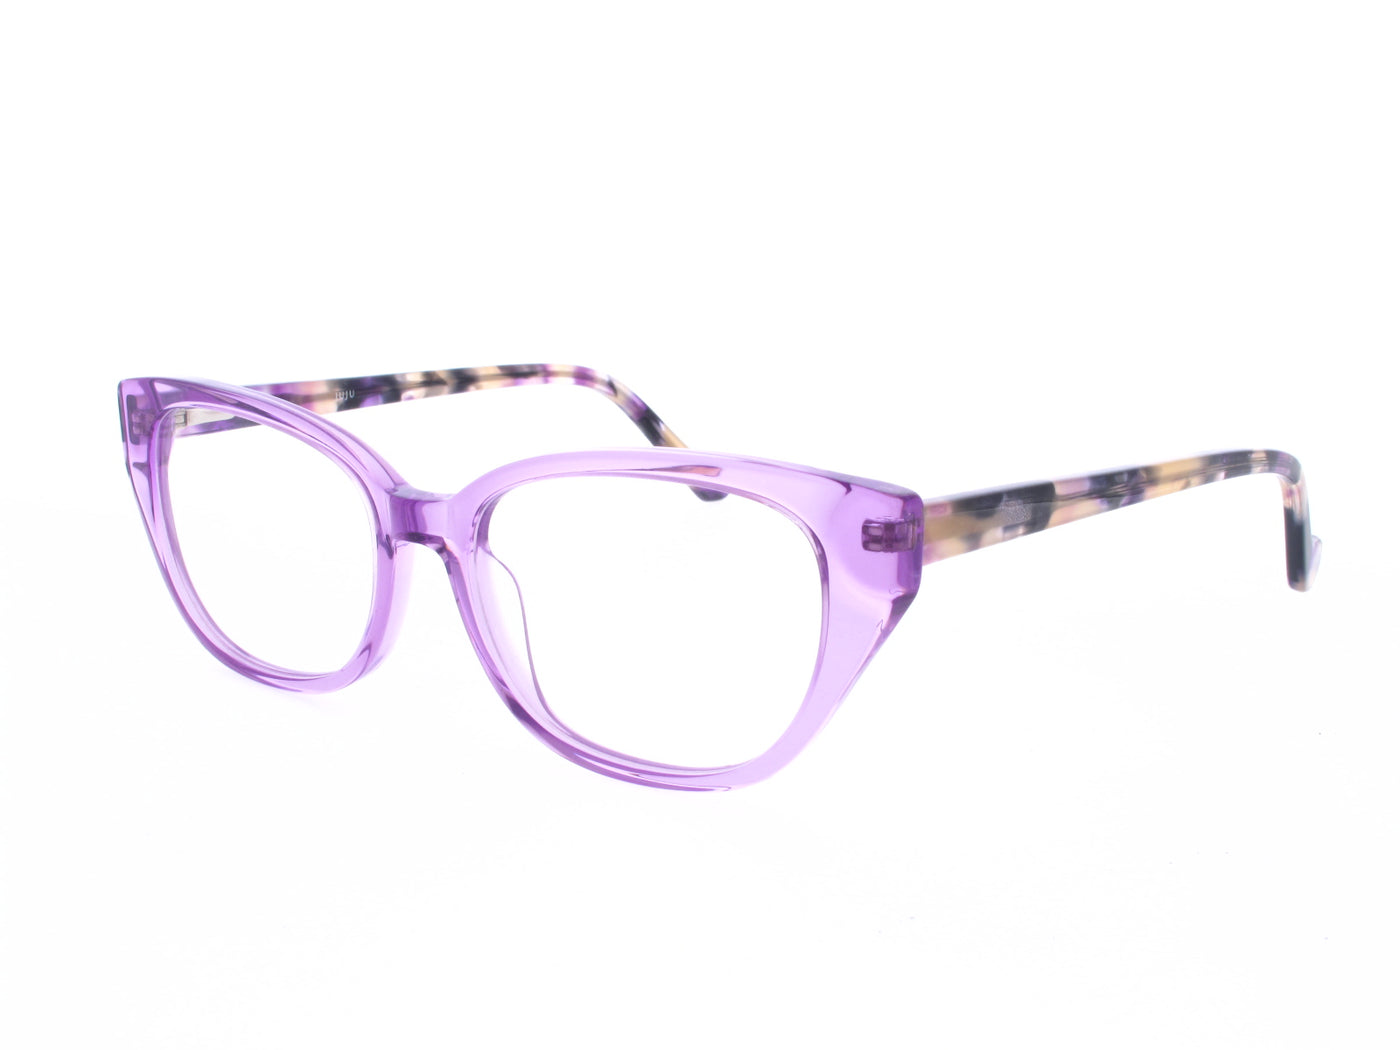 Cateye Glasses 824842